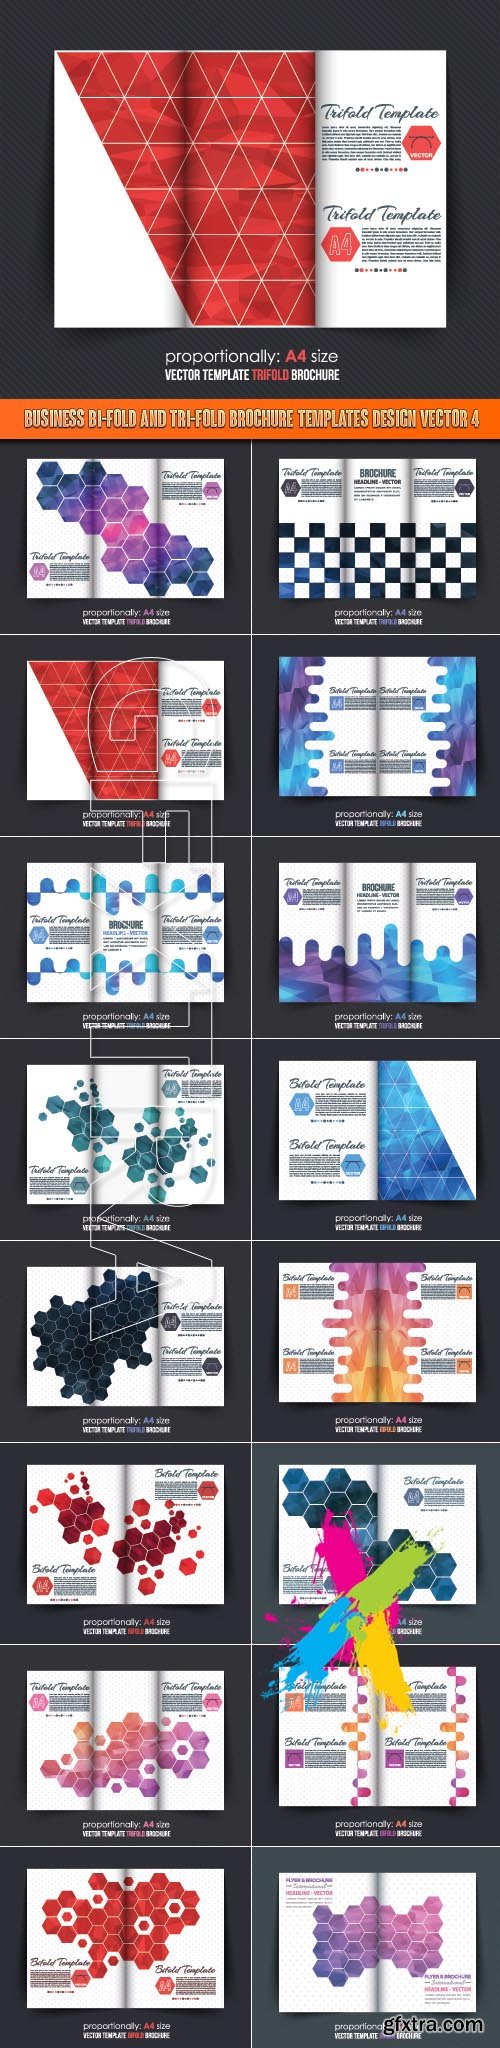 Business bi-fold and tri-fold brochure templates design vector 4